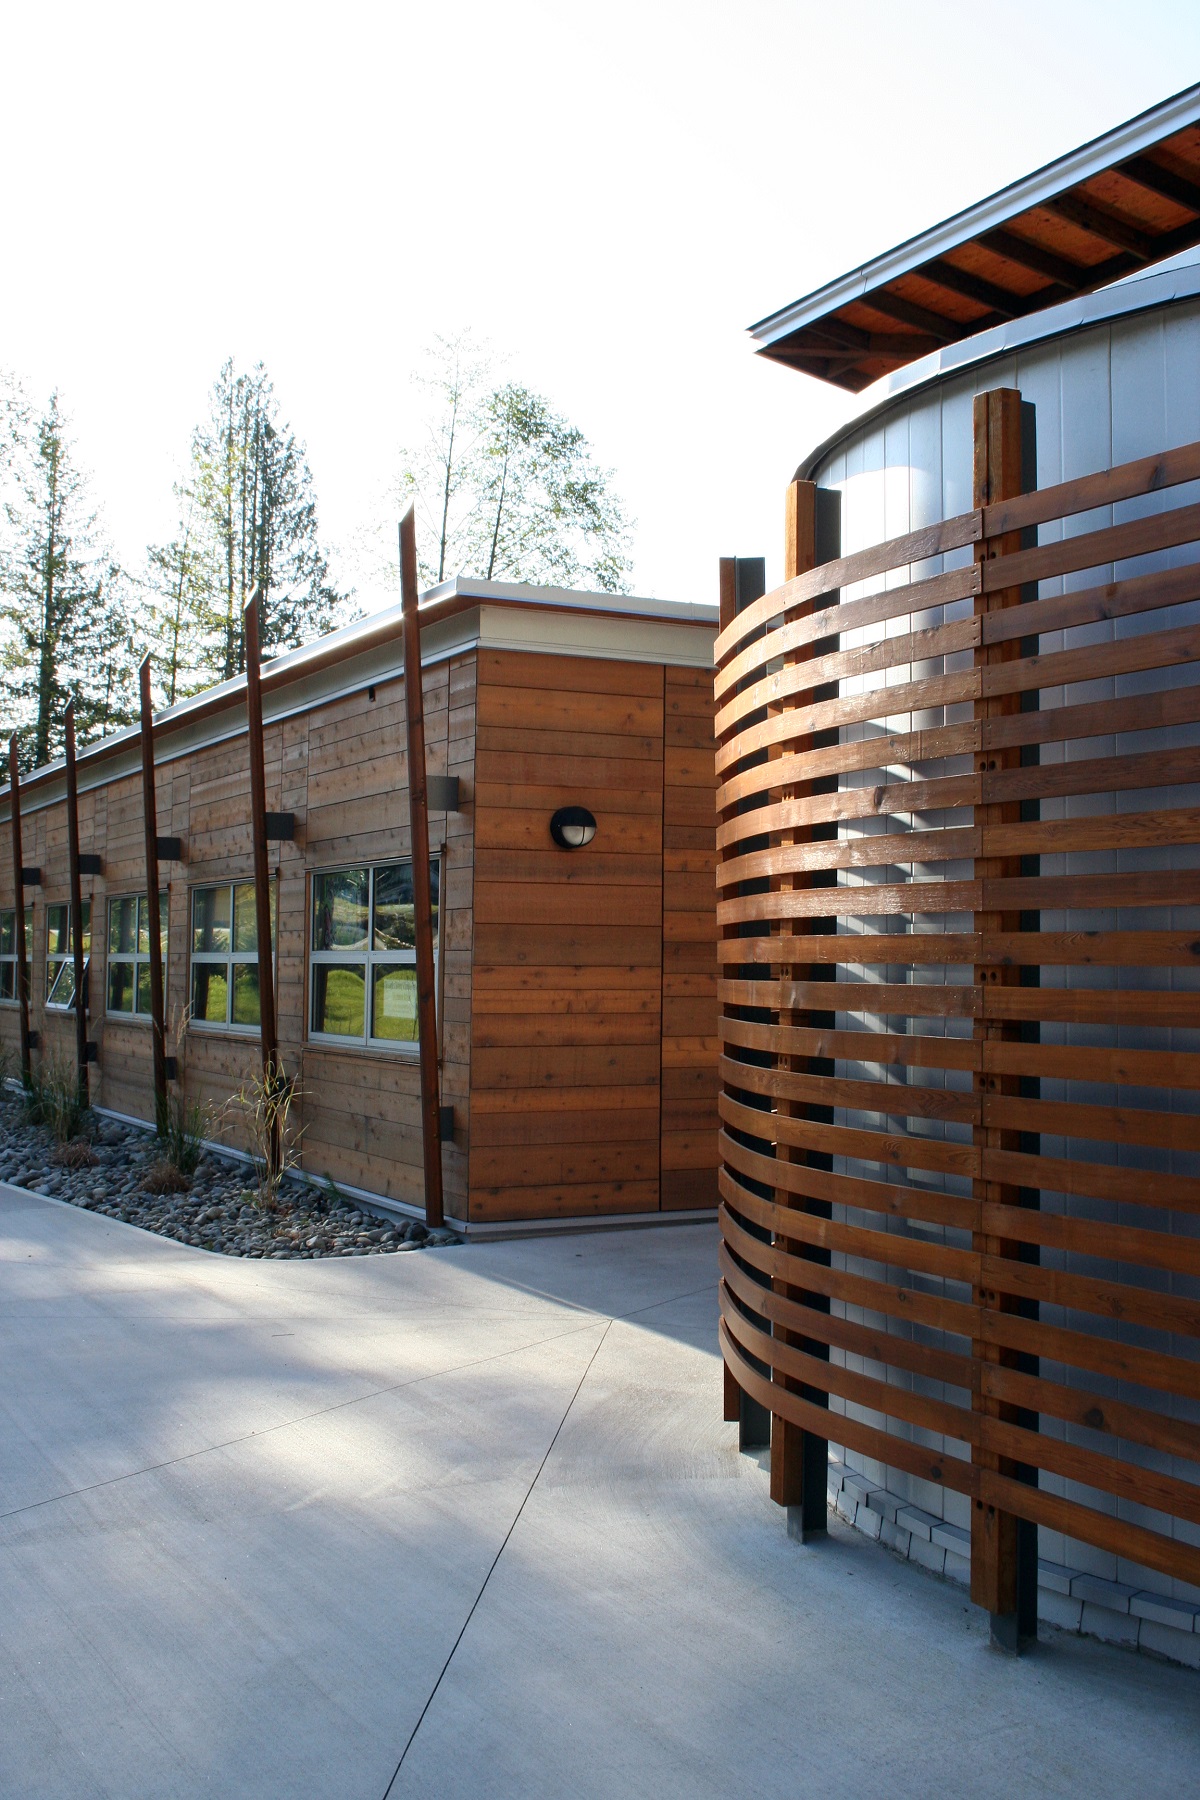 Tla'Amin社区卫生服务大楼低矮的外景下午视图，显示大量使用木壁板和装饰木装饰